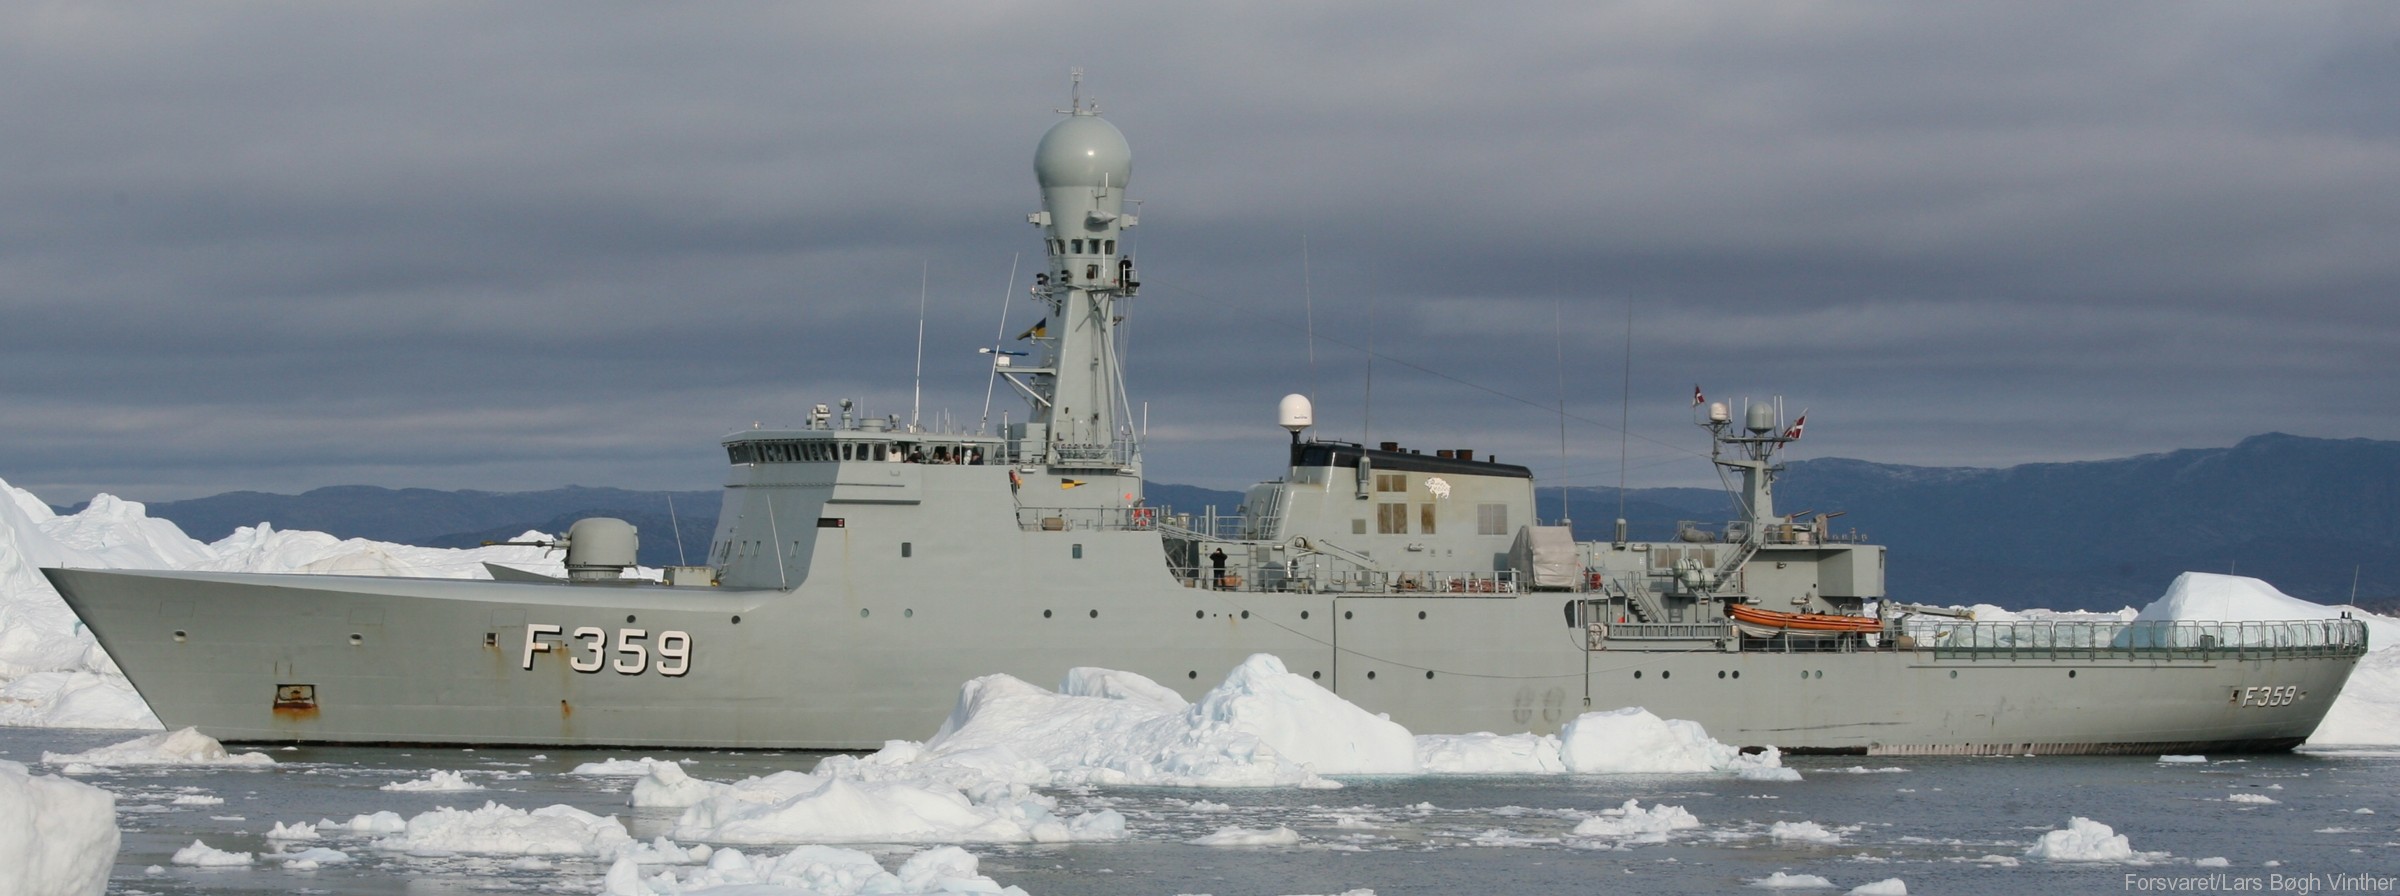 f-359 hdms vaedderen thetis class ocean patrol frigate royal danish navy kongelige danske marine kdm inspektionsskibet 27 arctic ice polar